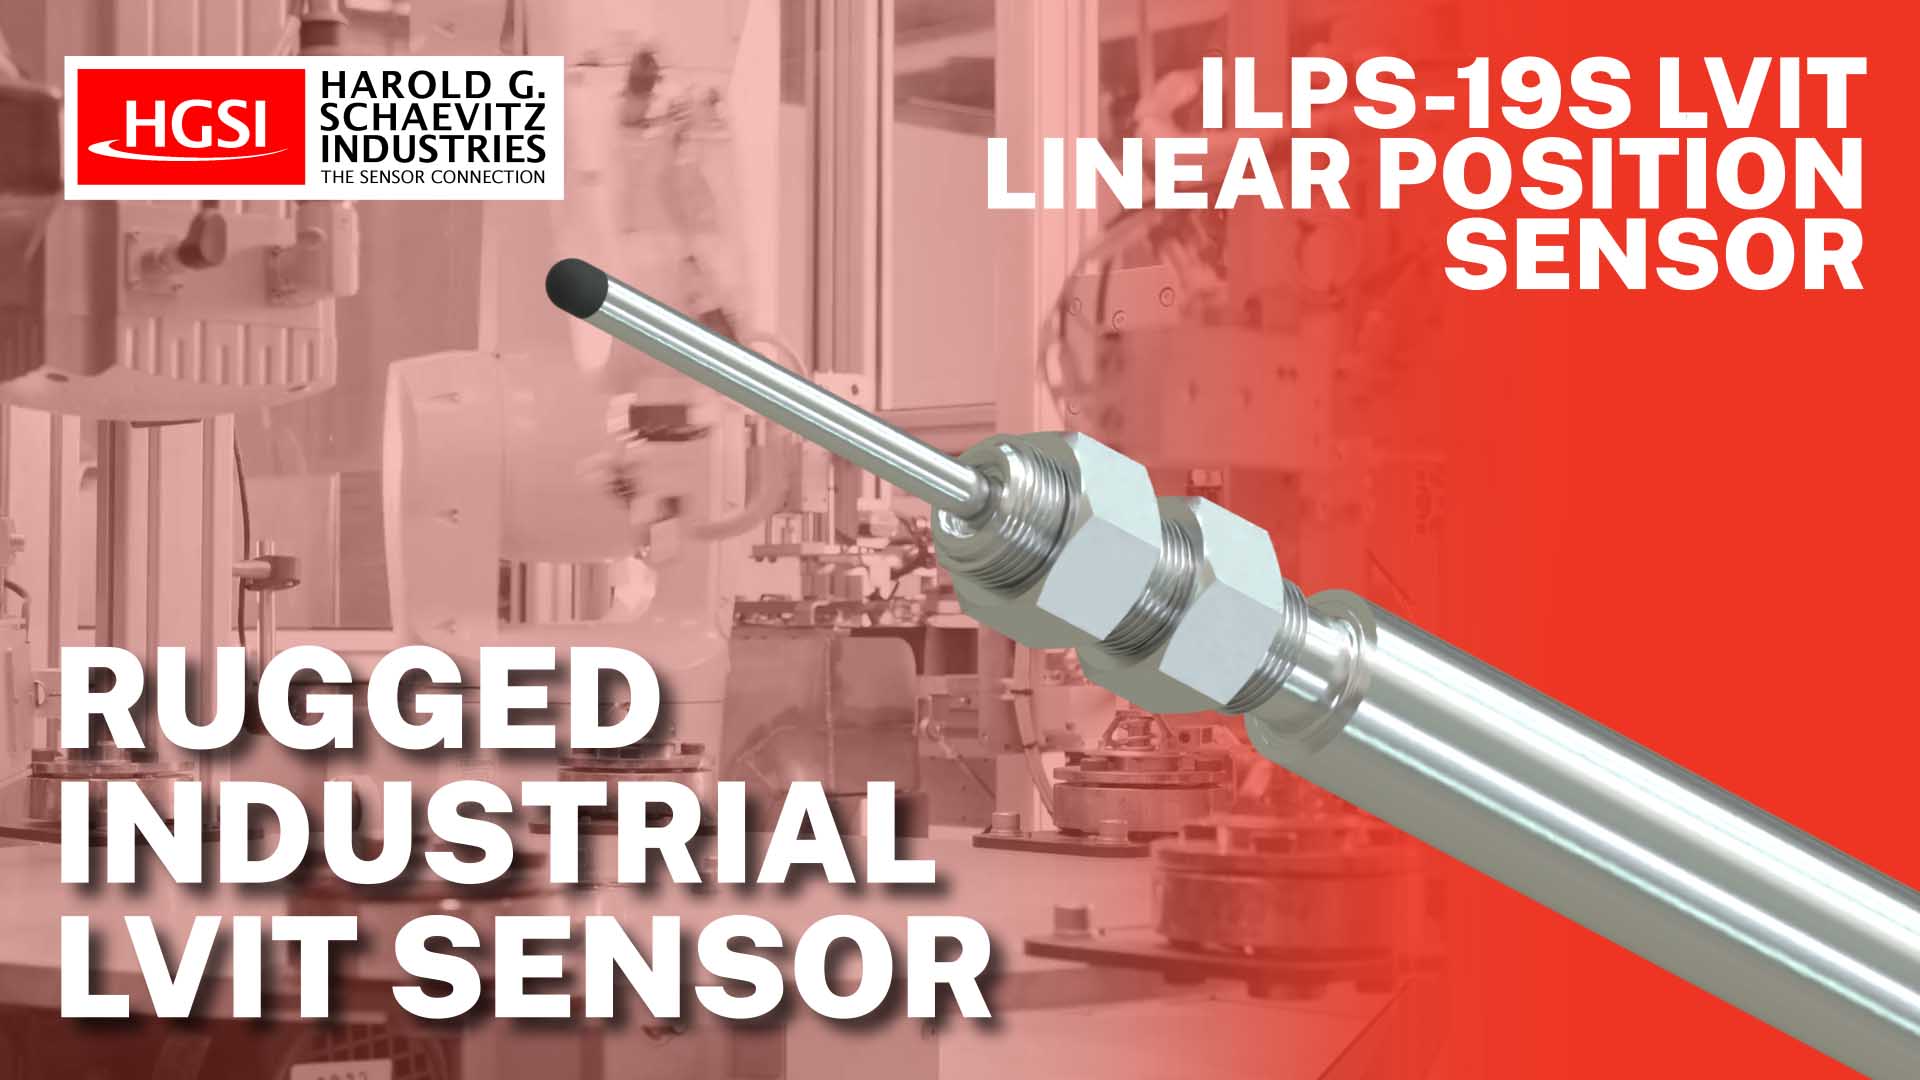 Overview of ILPS-19S Series LVIT Linear Position Sensor